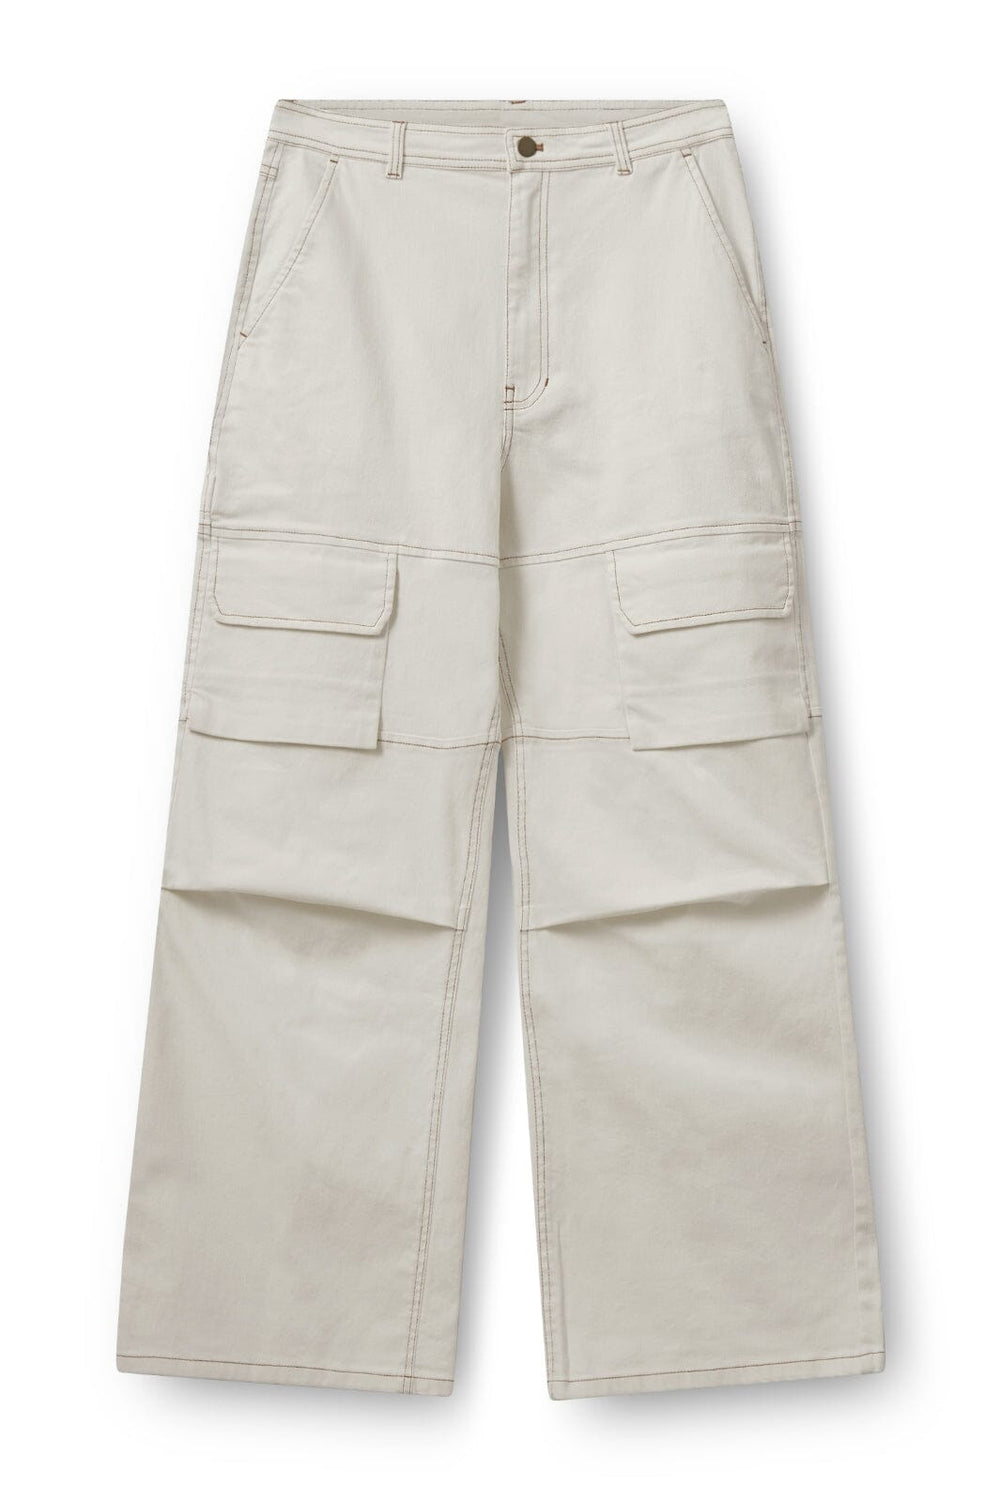 H2O Fagerholt - Classic Box Jeans - 1003 Cream White Bukser 